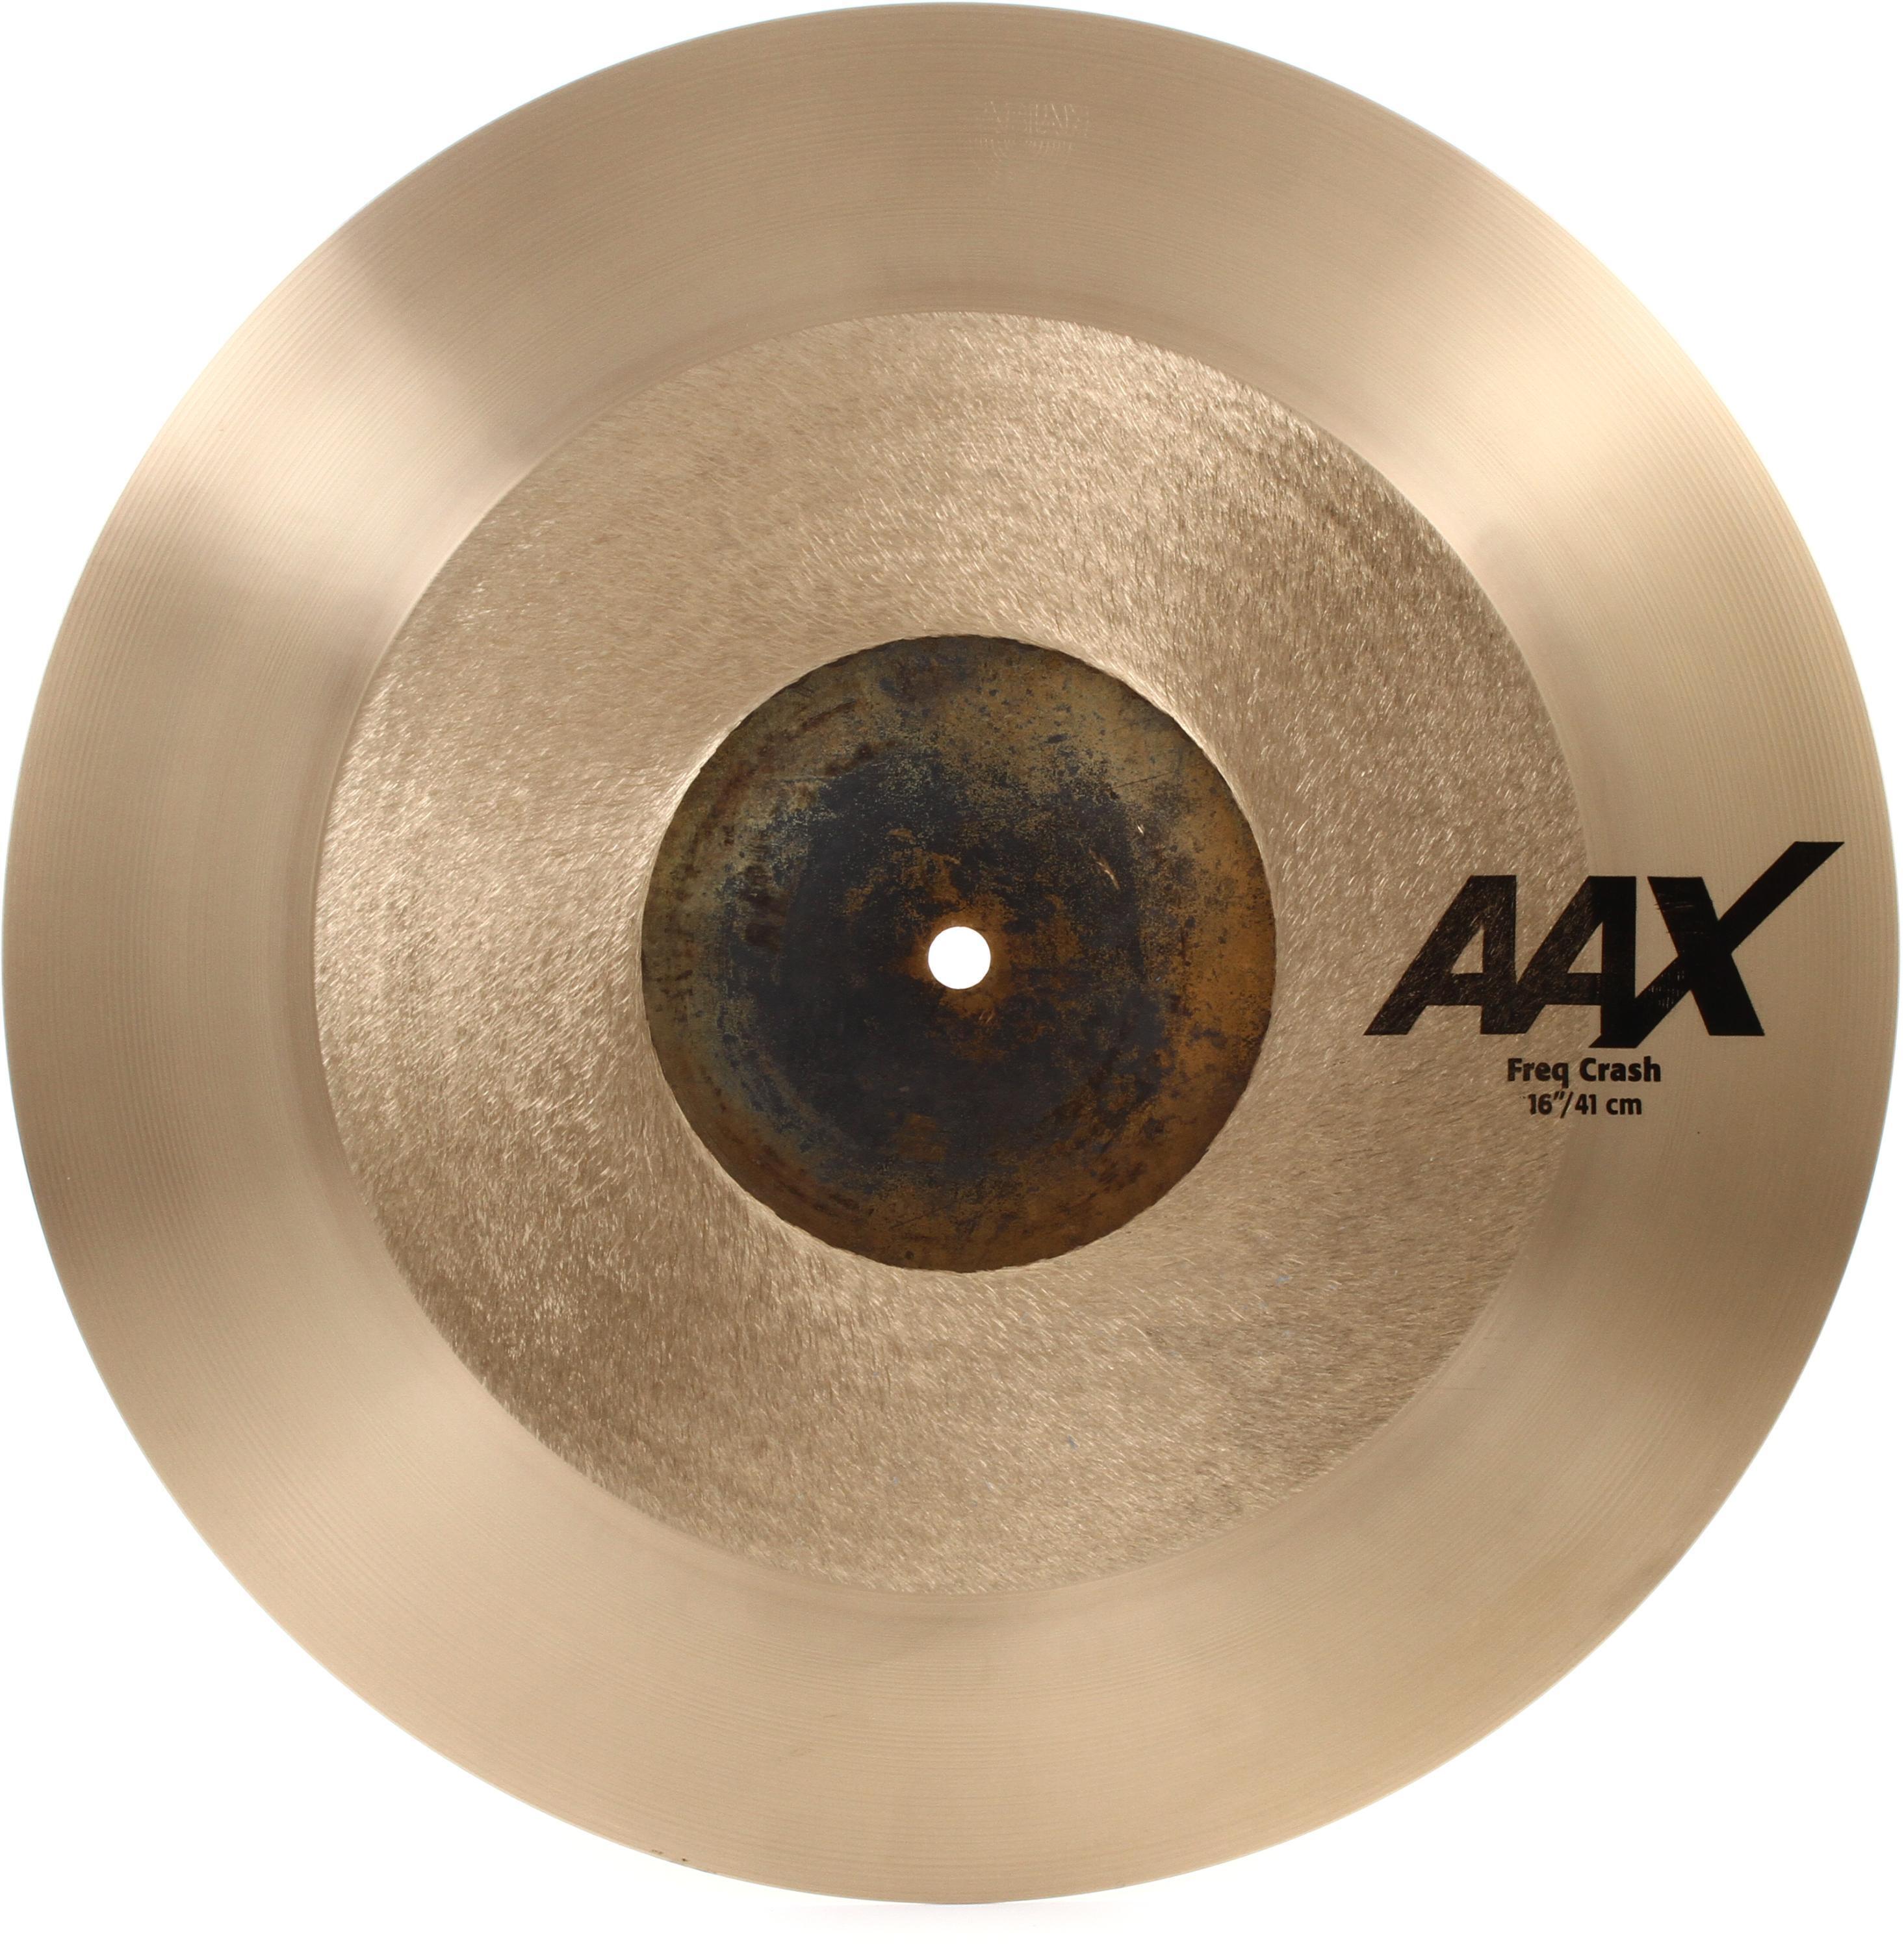 Sabian 18 inch AAX Freq Crash Cymbal | Sweetwater